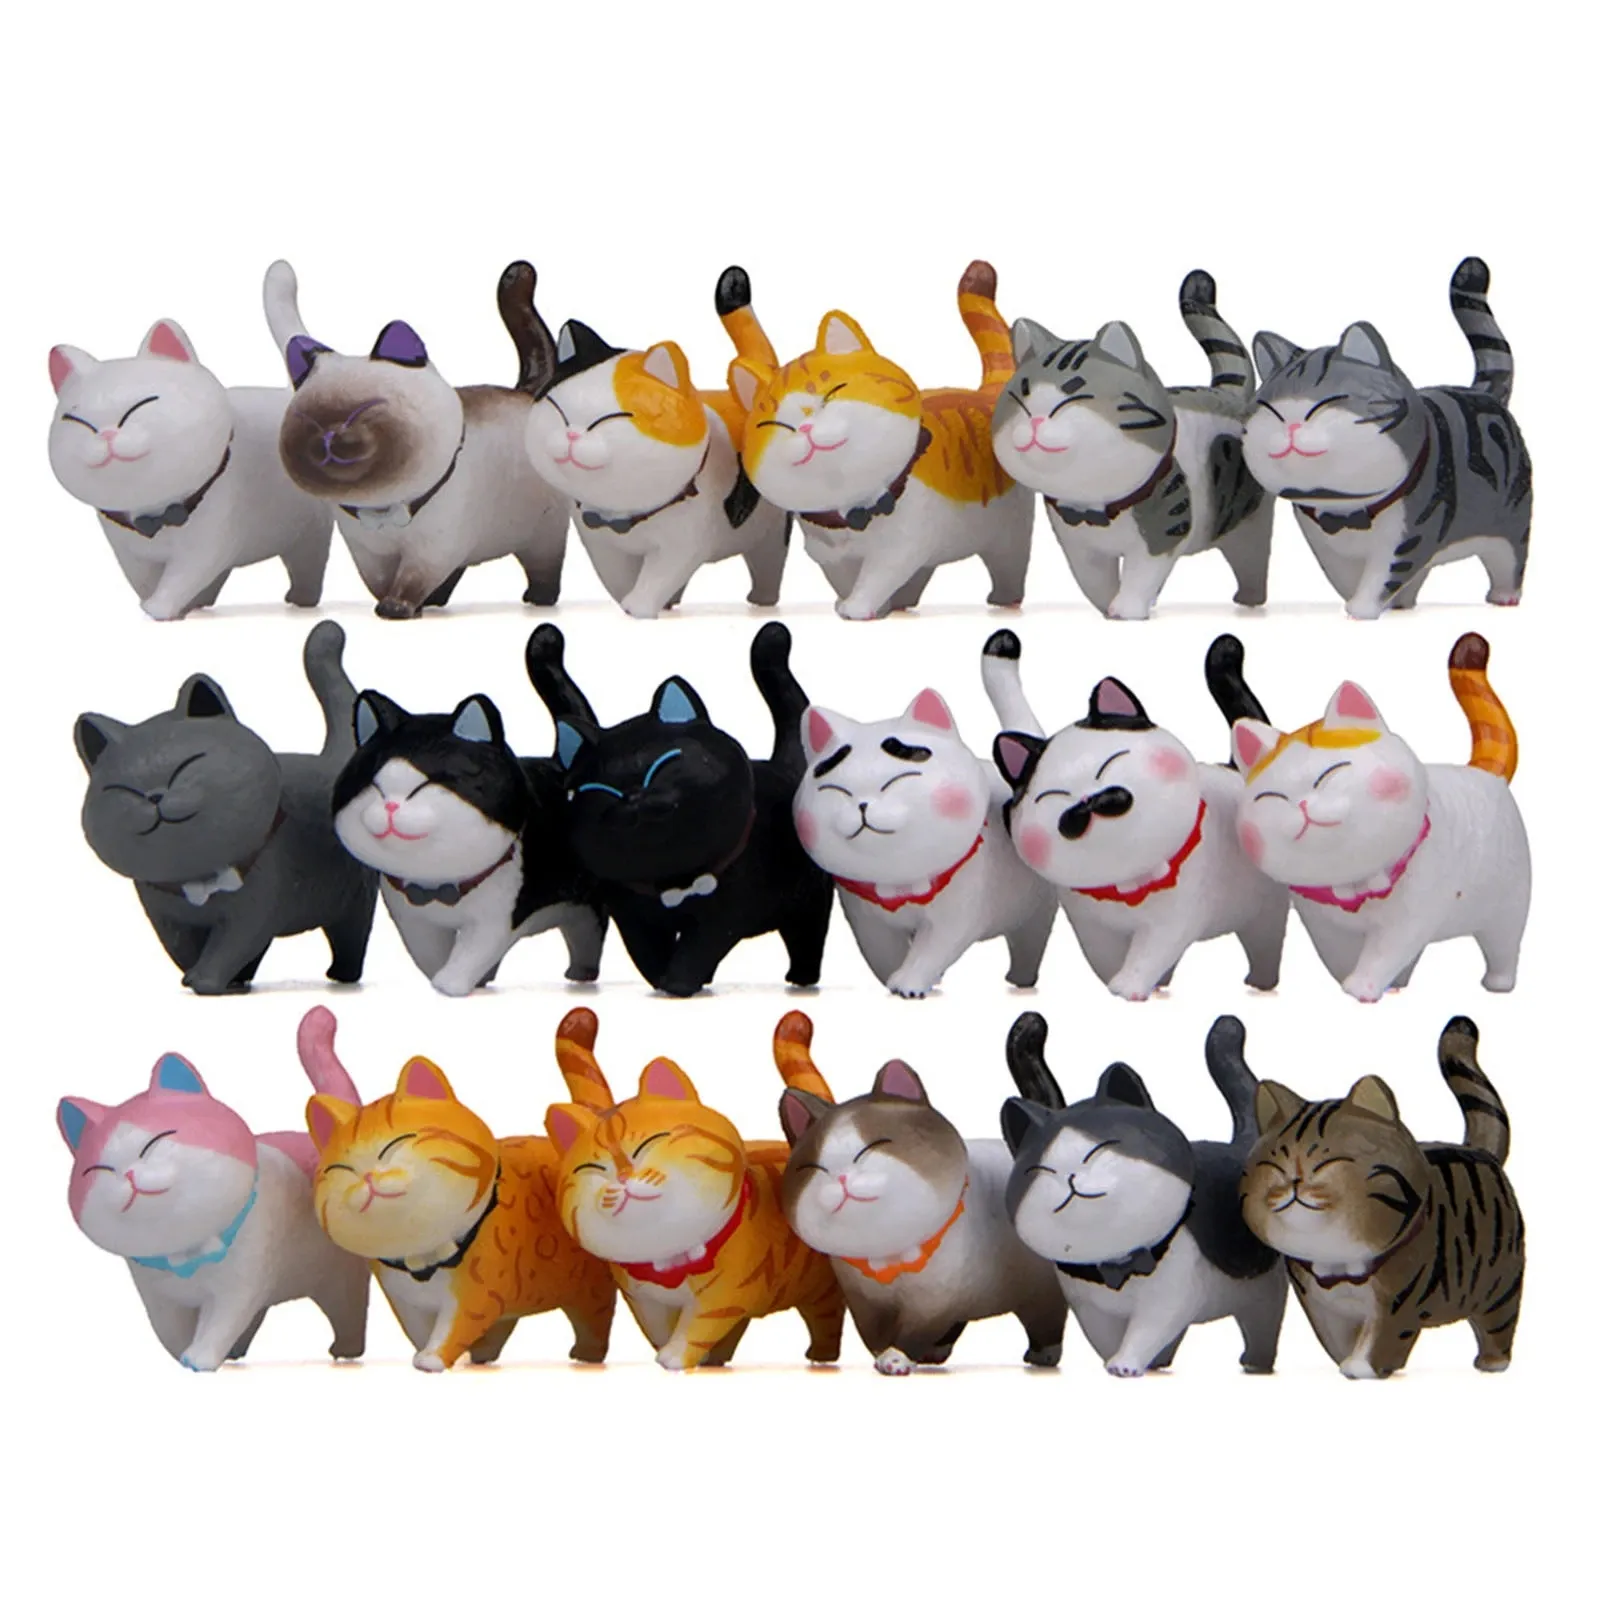 9Pcs Cute Cat Ornaments Kawaii Bell Cat Animal Fairy Garden Figurines Accessories Home Decoration Desktop Model Birthday Gift